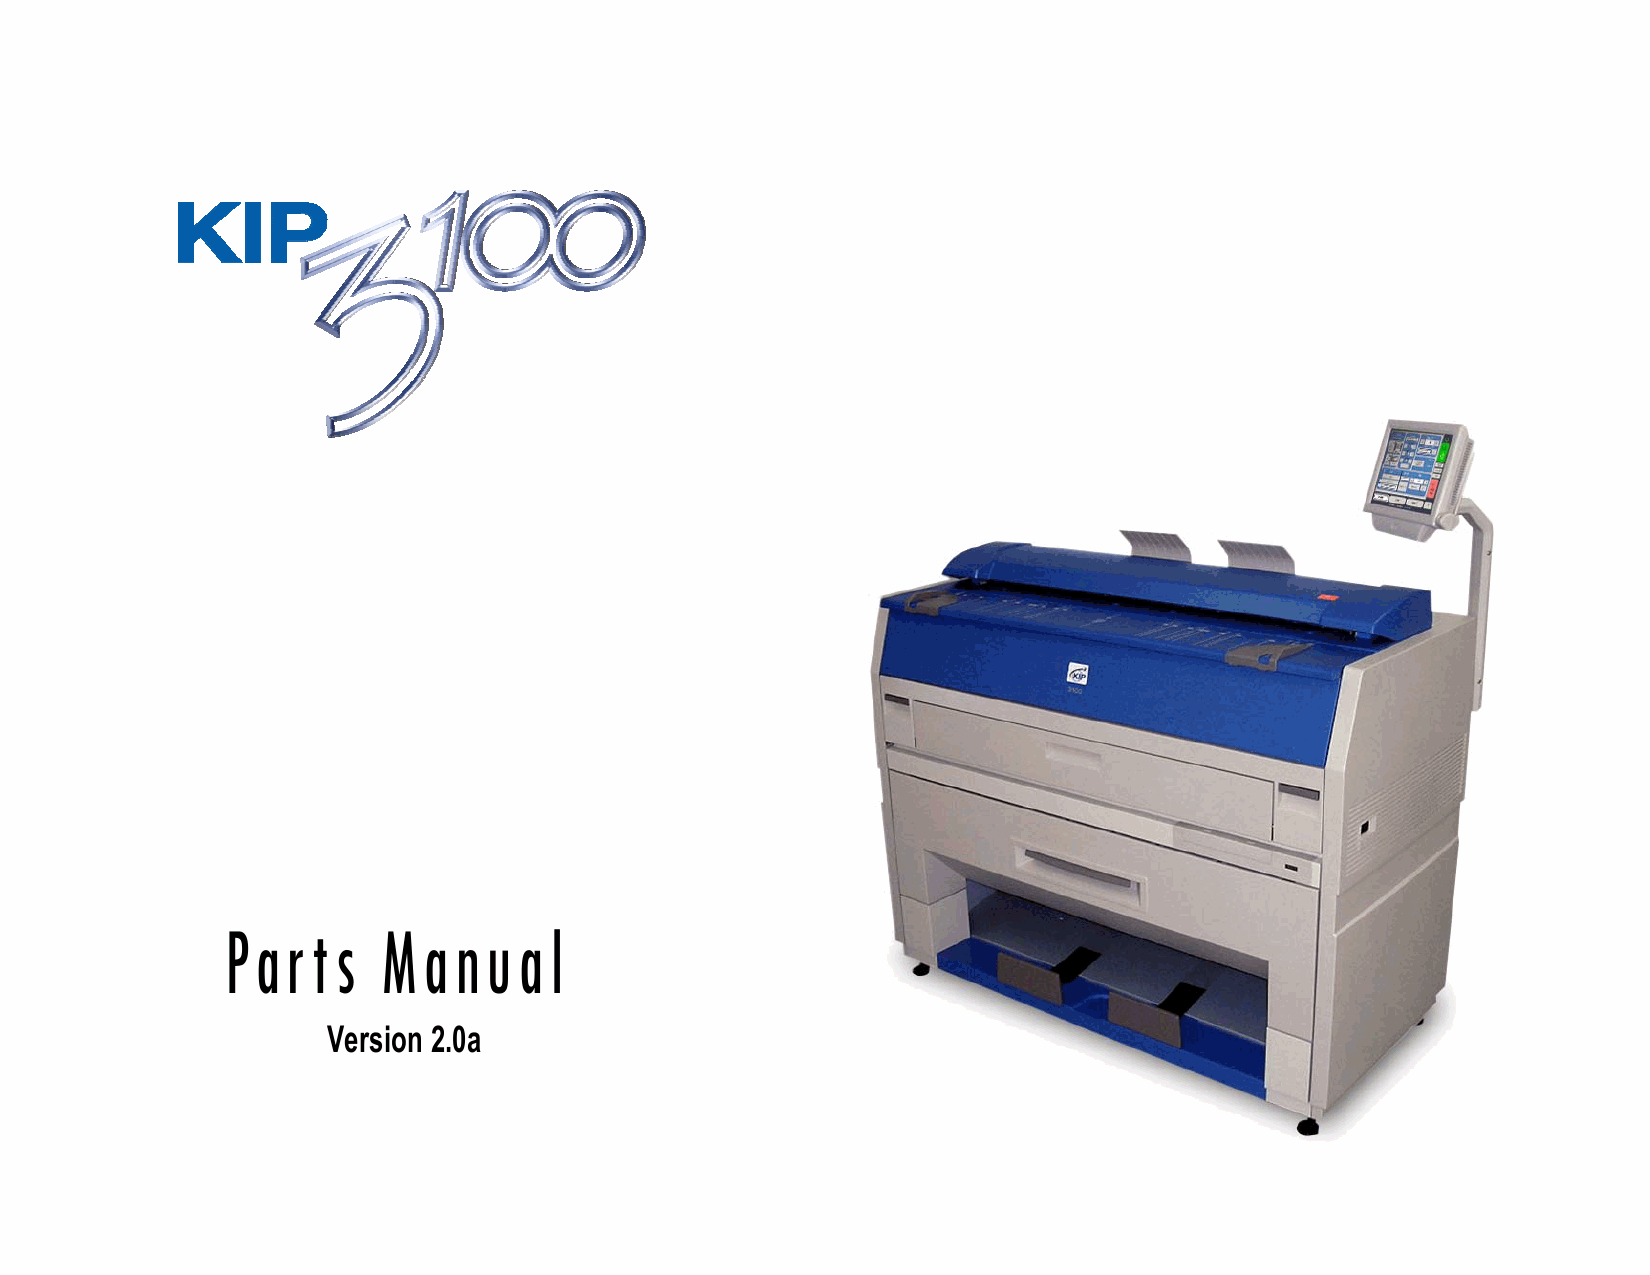 KIP 3100 Parts Manual-1